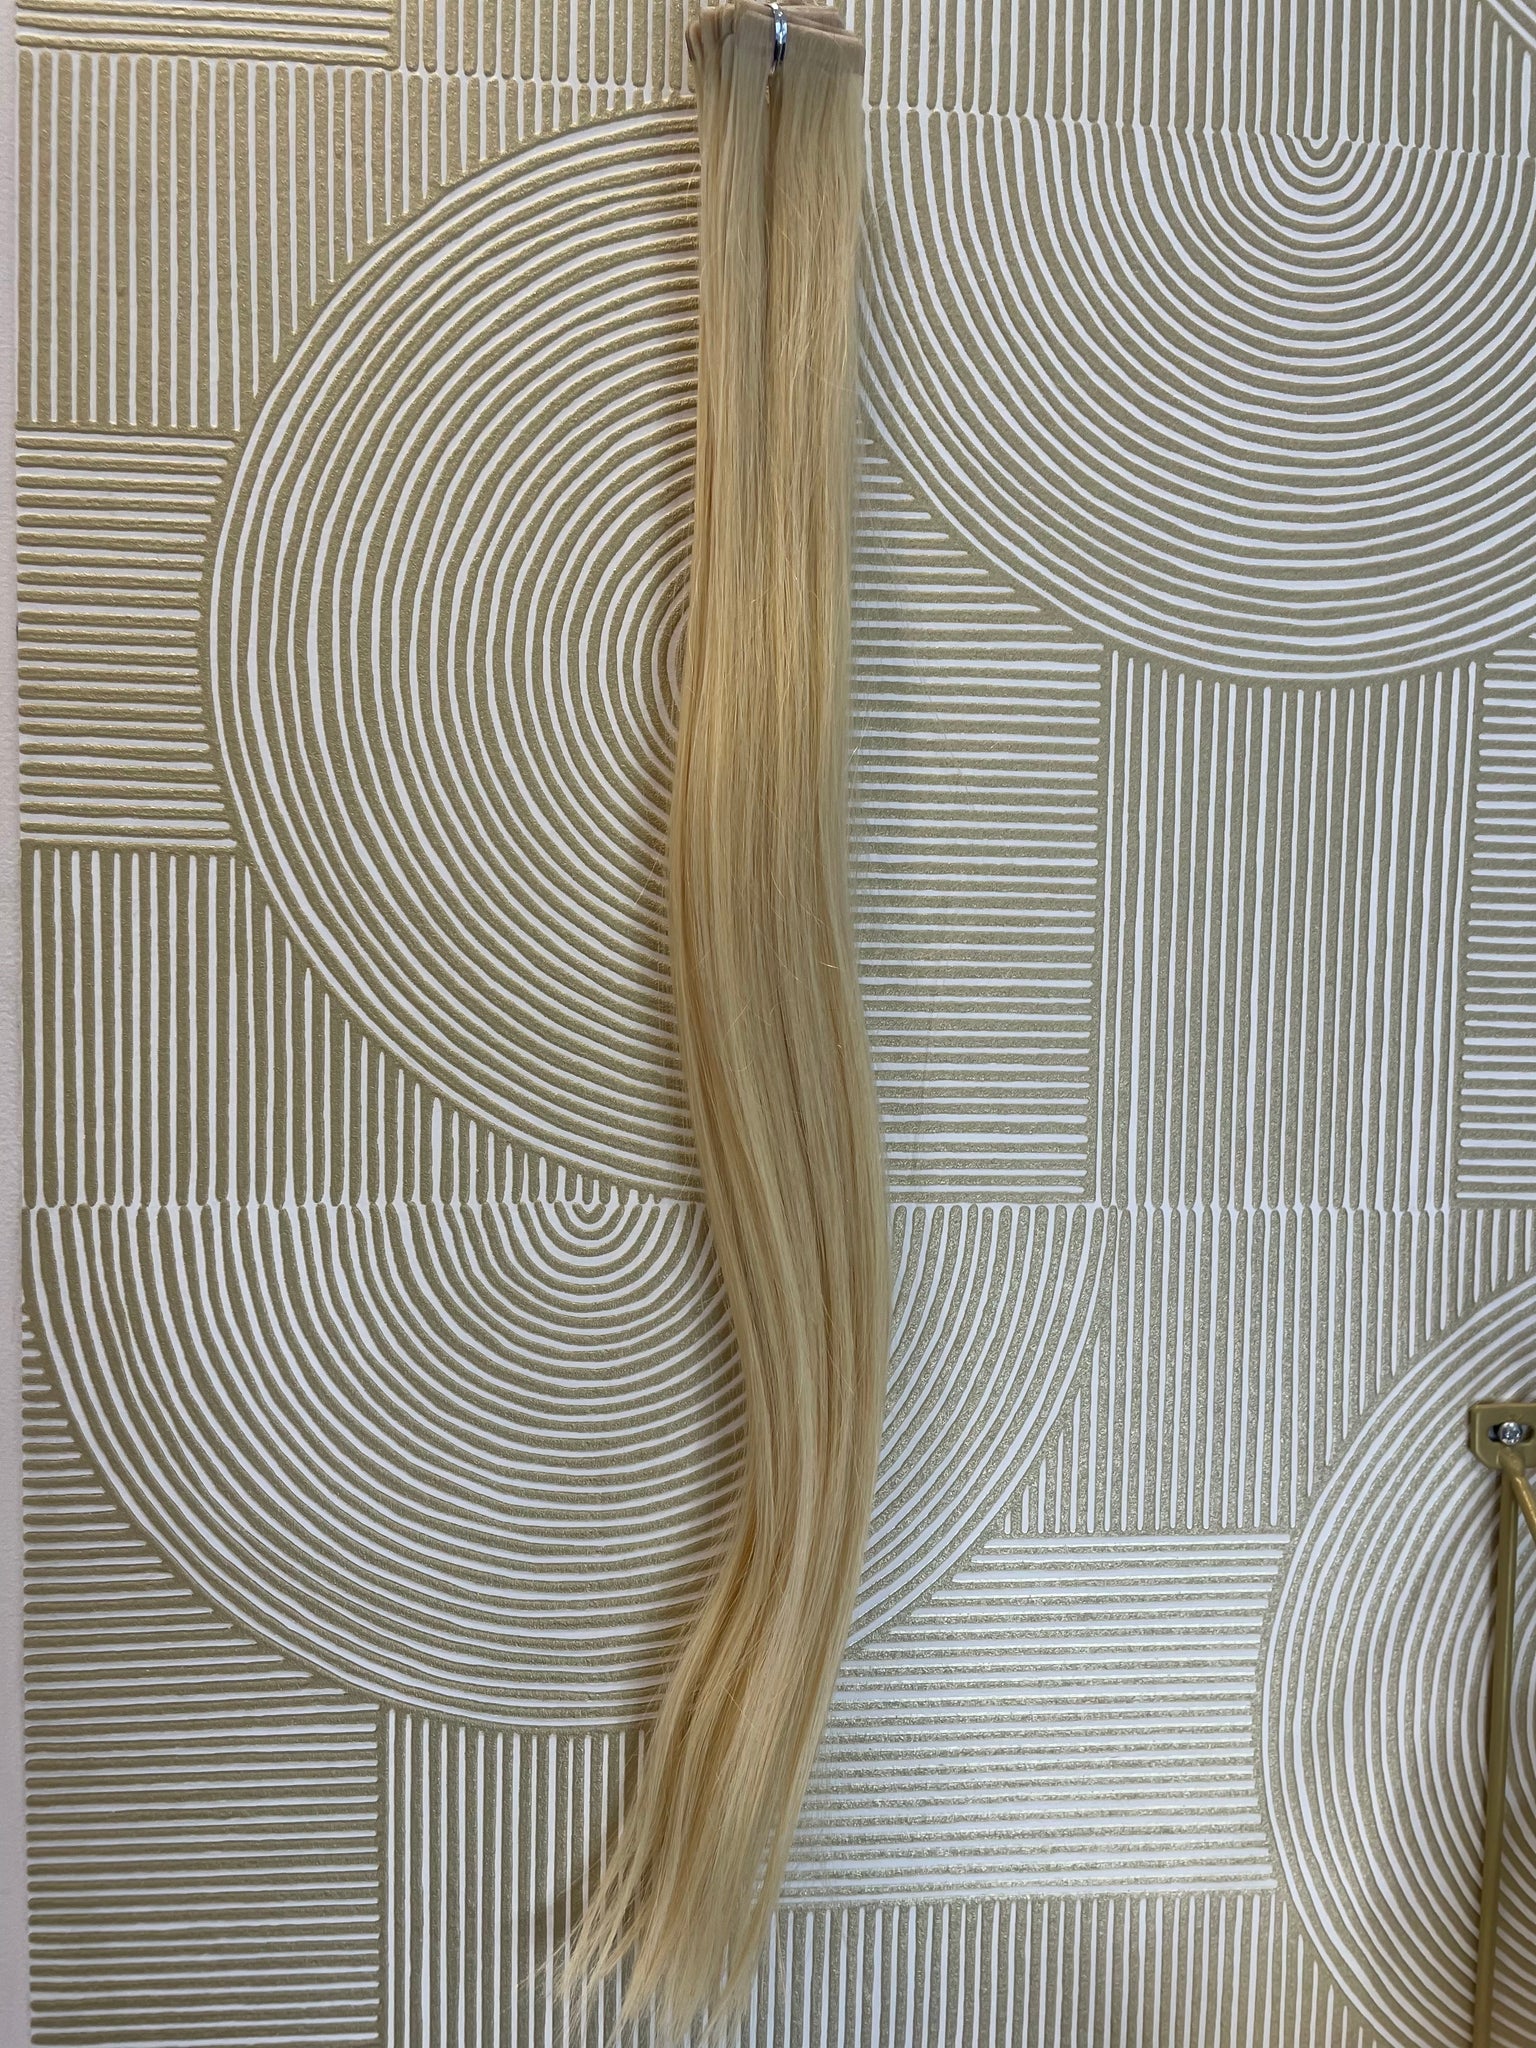 Extensions Tape invisible 50 gram (613) 55 cm European hair